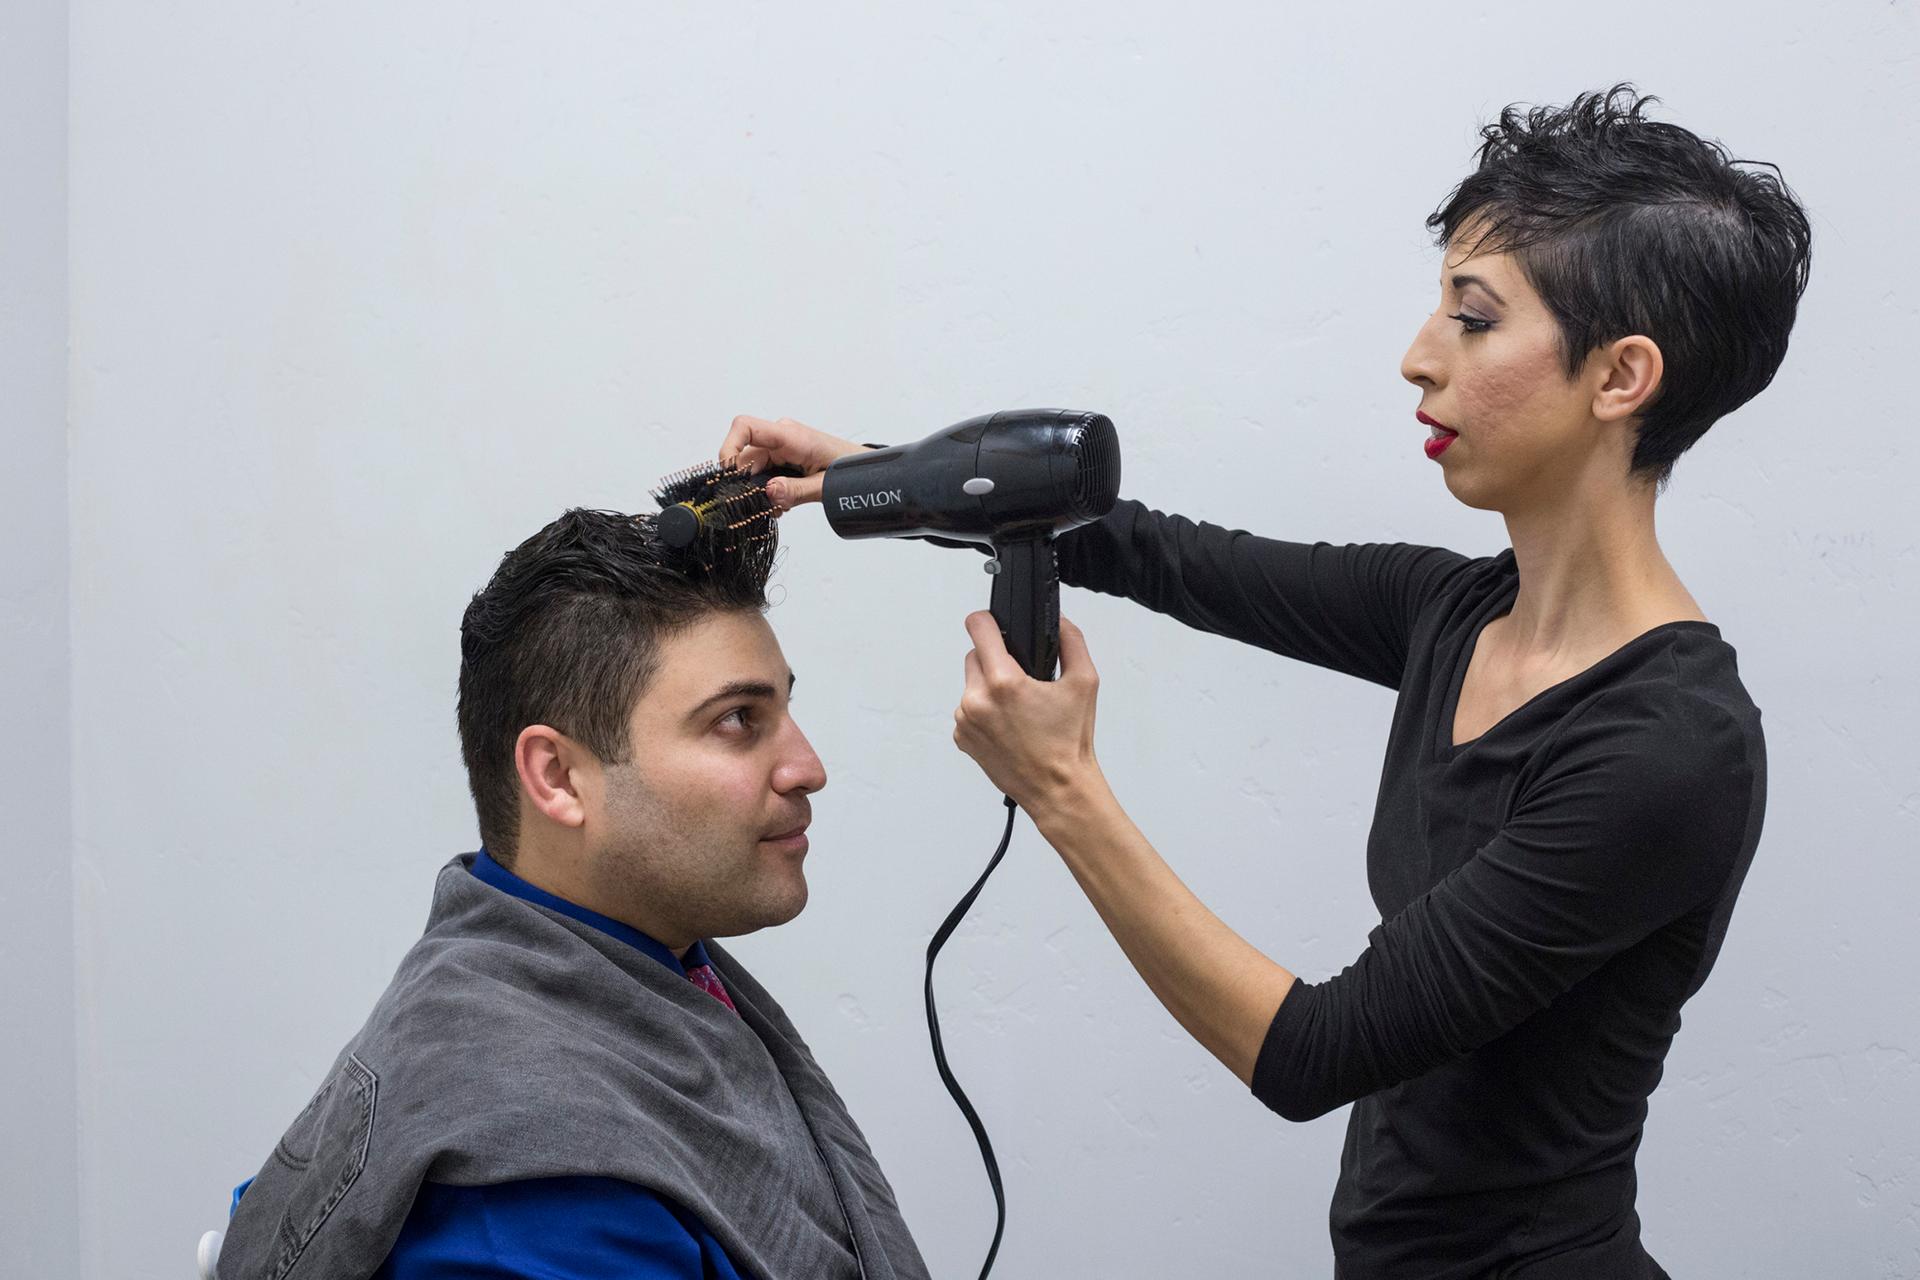 Omar’s wife, Jasmín, helps him fix his hair before their performance